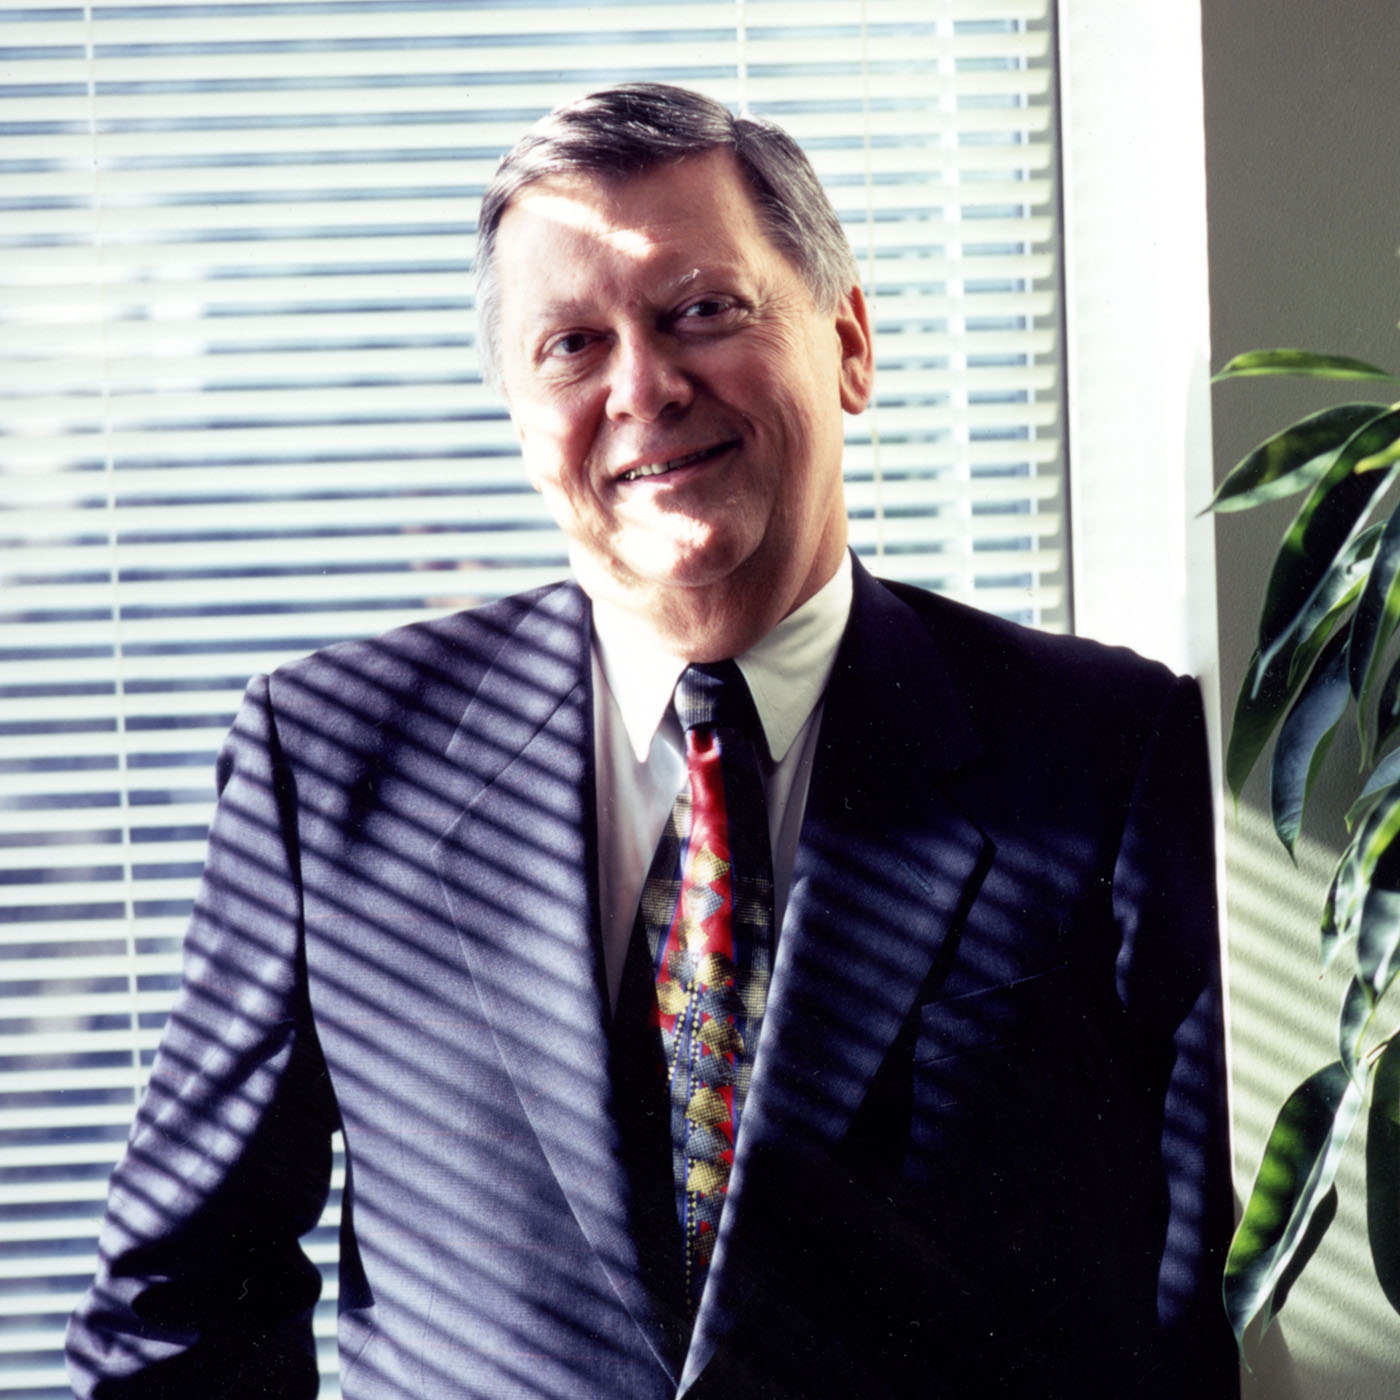 Rudolph Hasl, Dean of Seattle University School of Law from 2000-2005